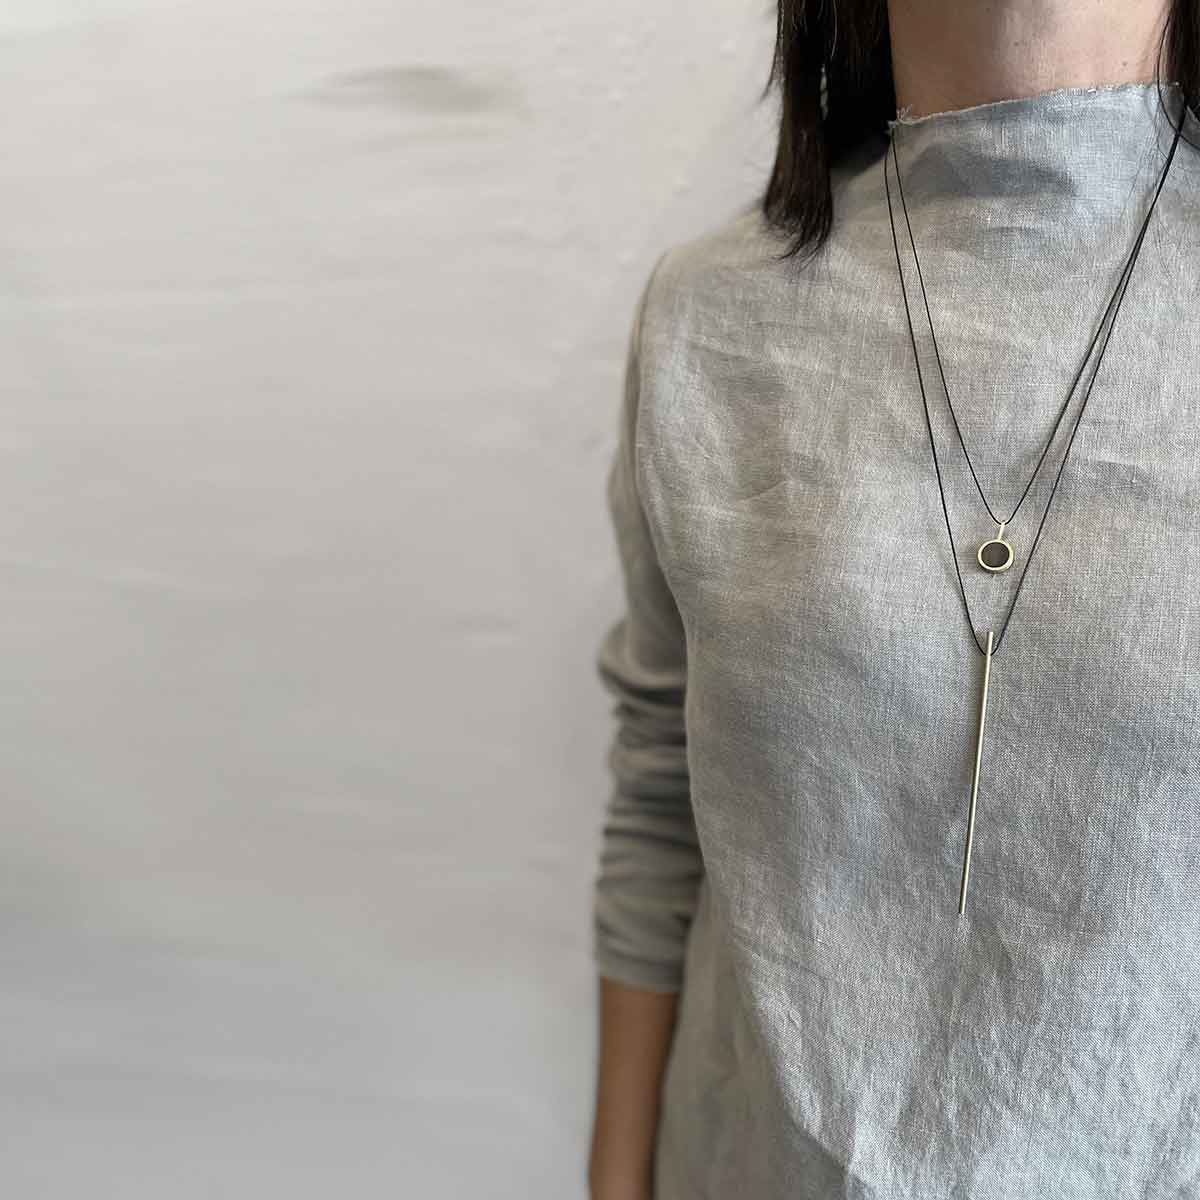 Round pendant necklace / שרשרת תליון עגול - studio oh design